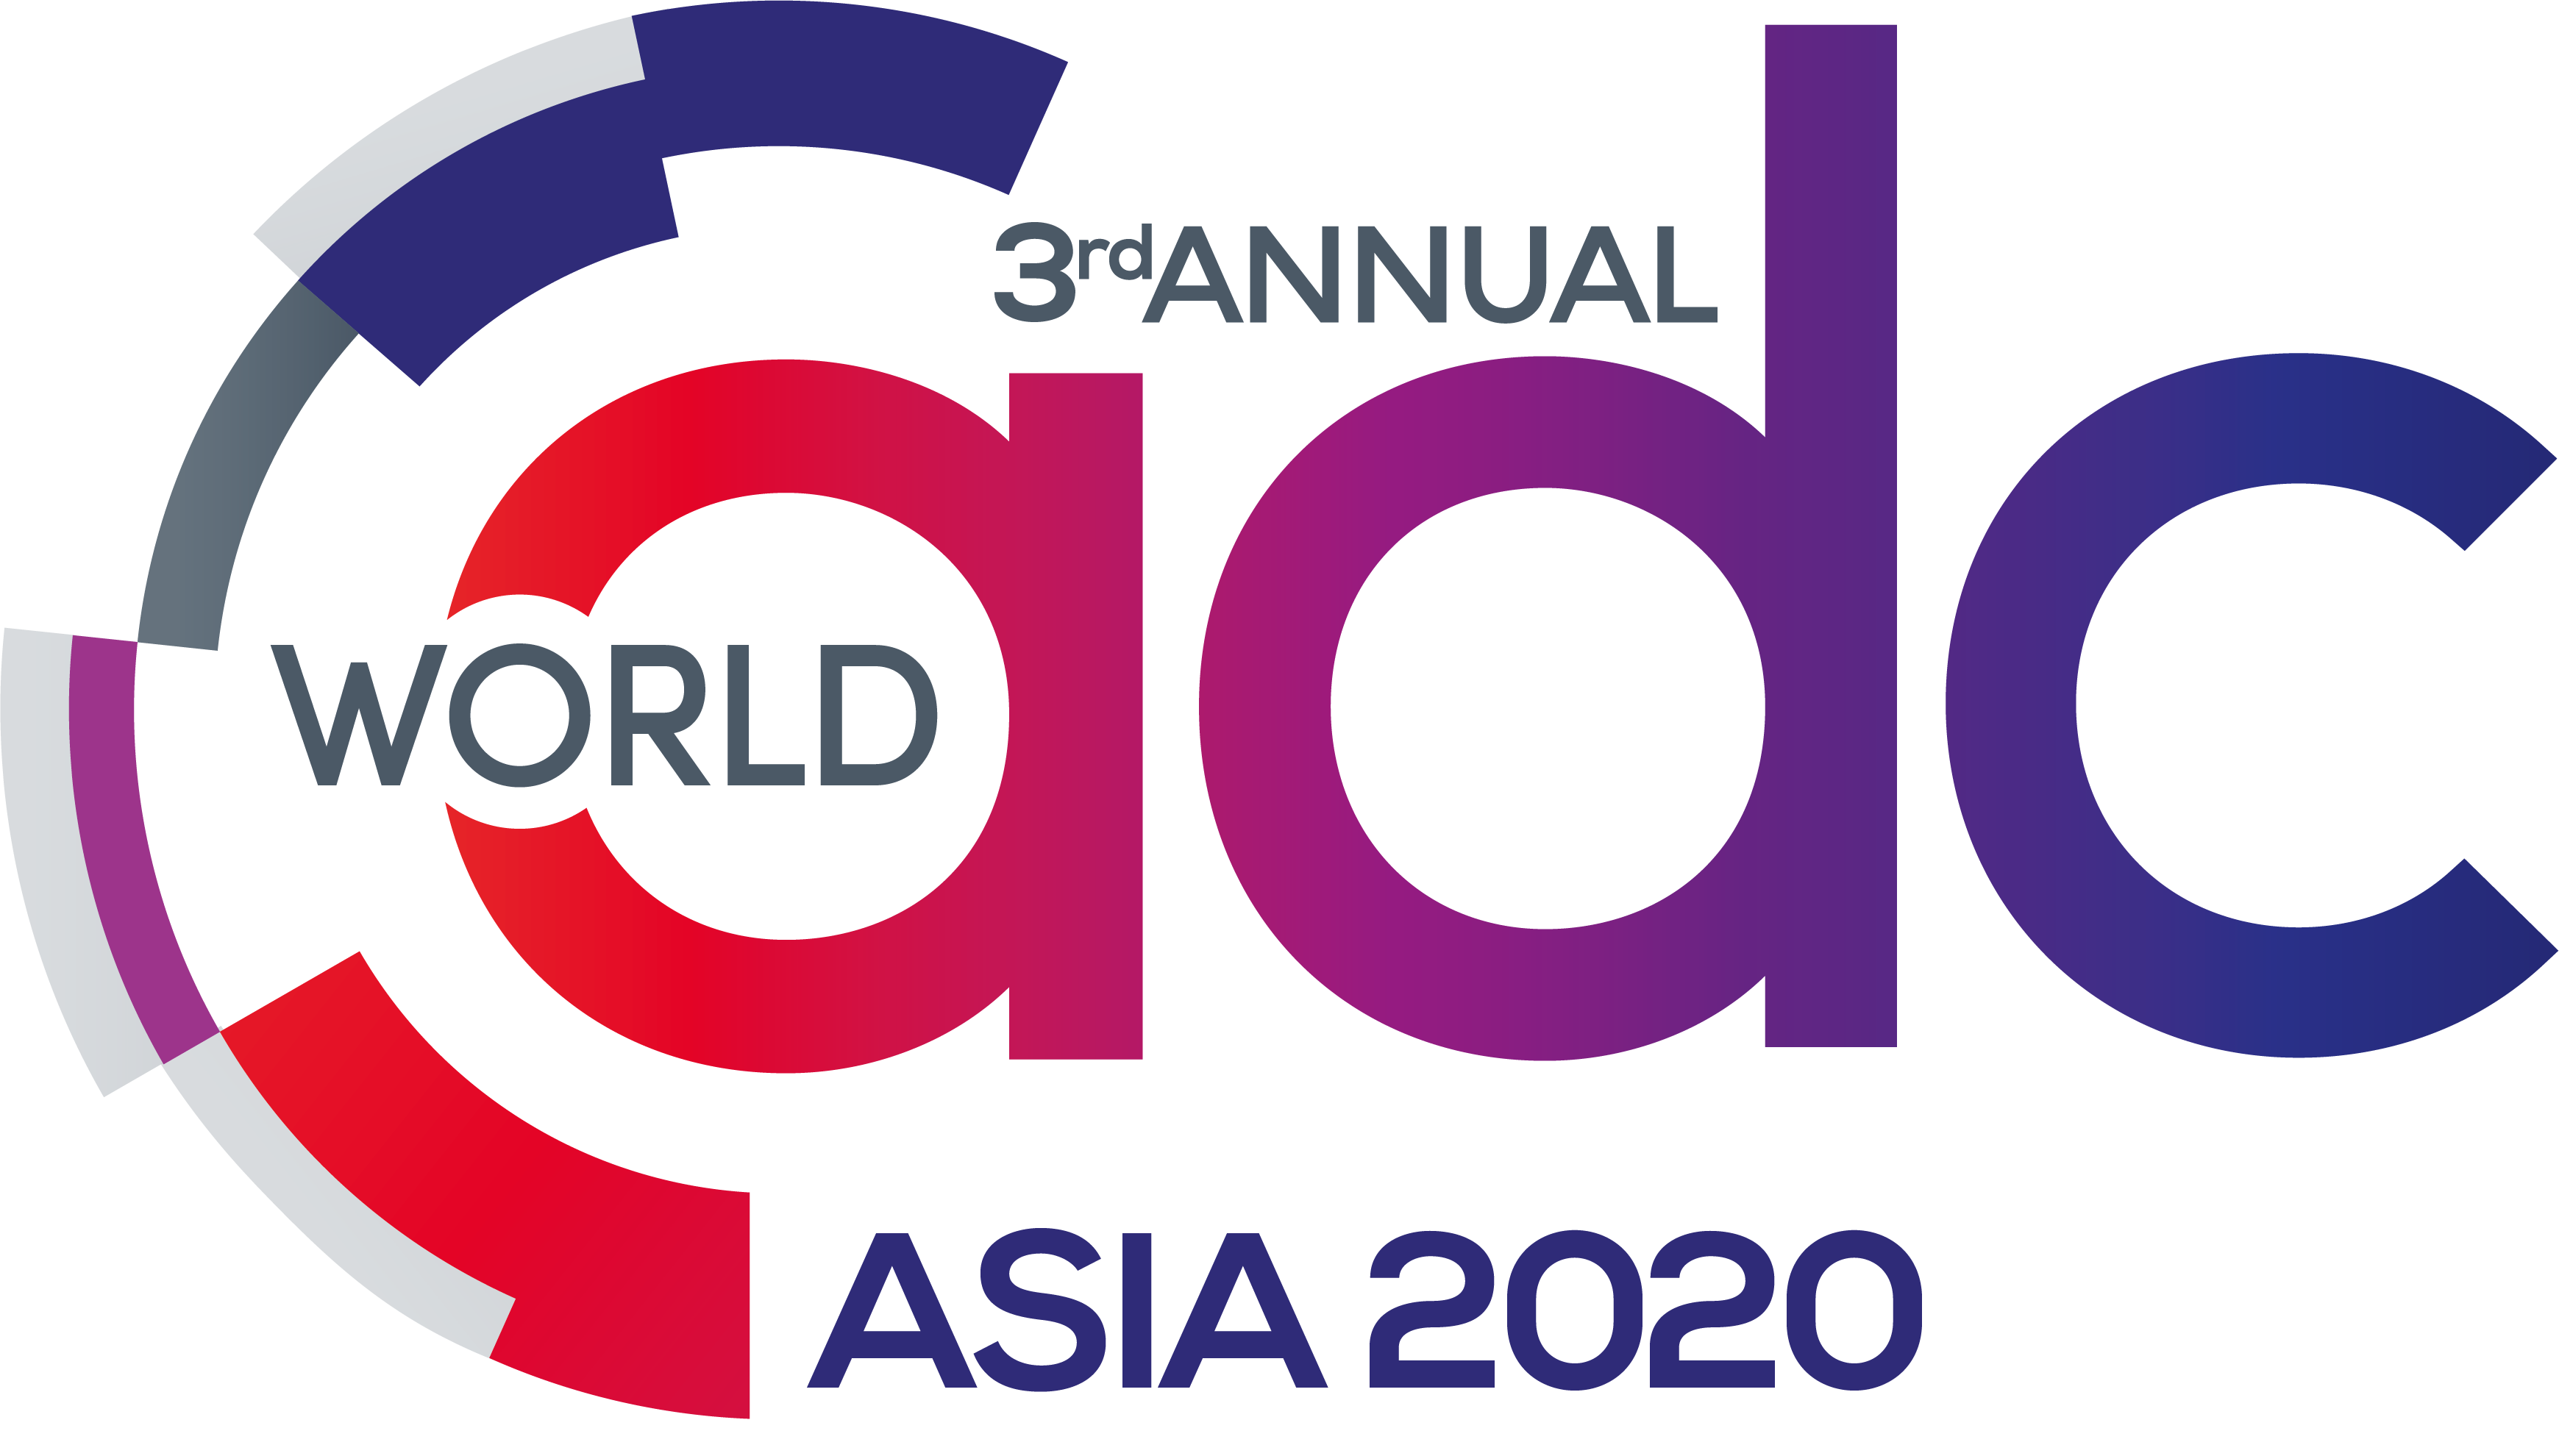 HW180812 ADC Asia 2020 logo FINAL